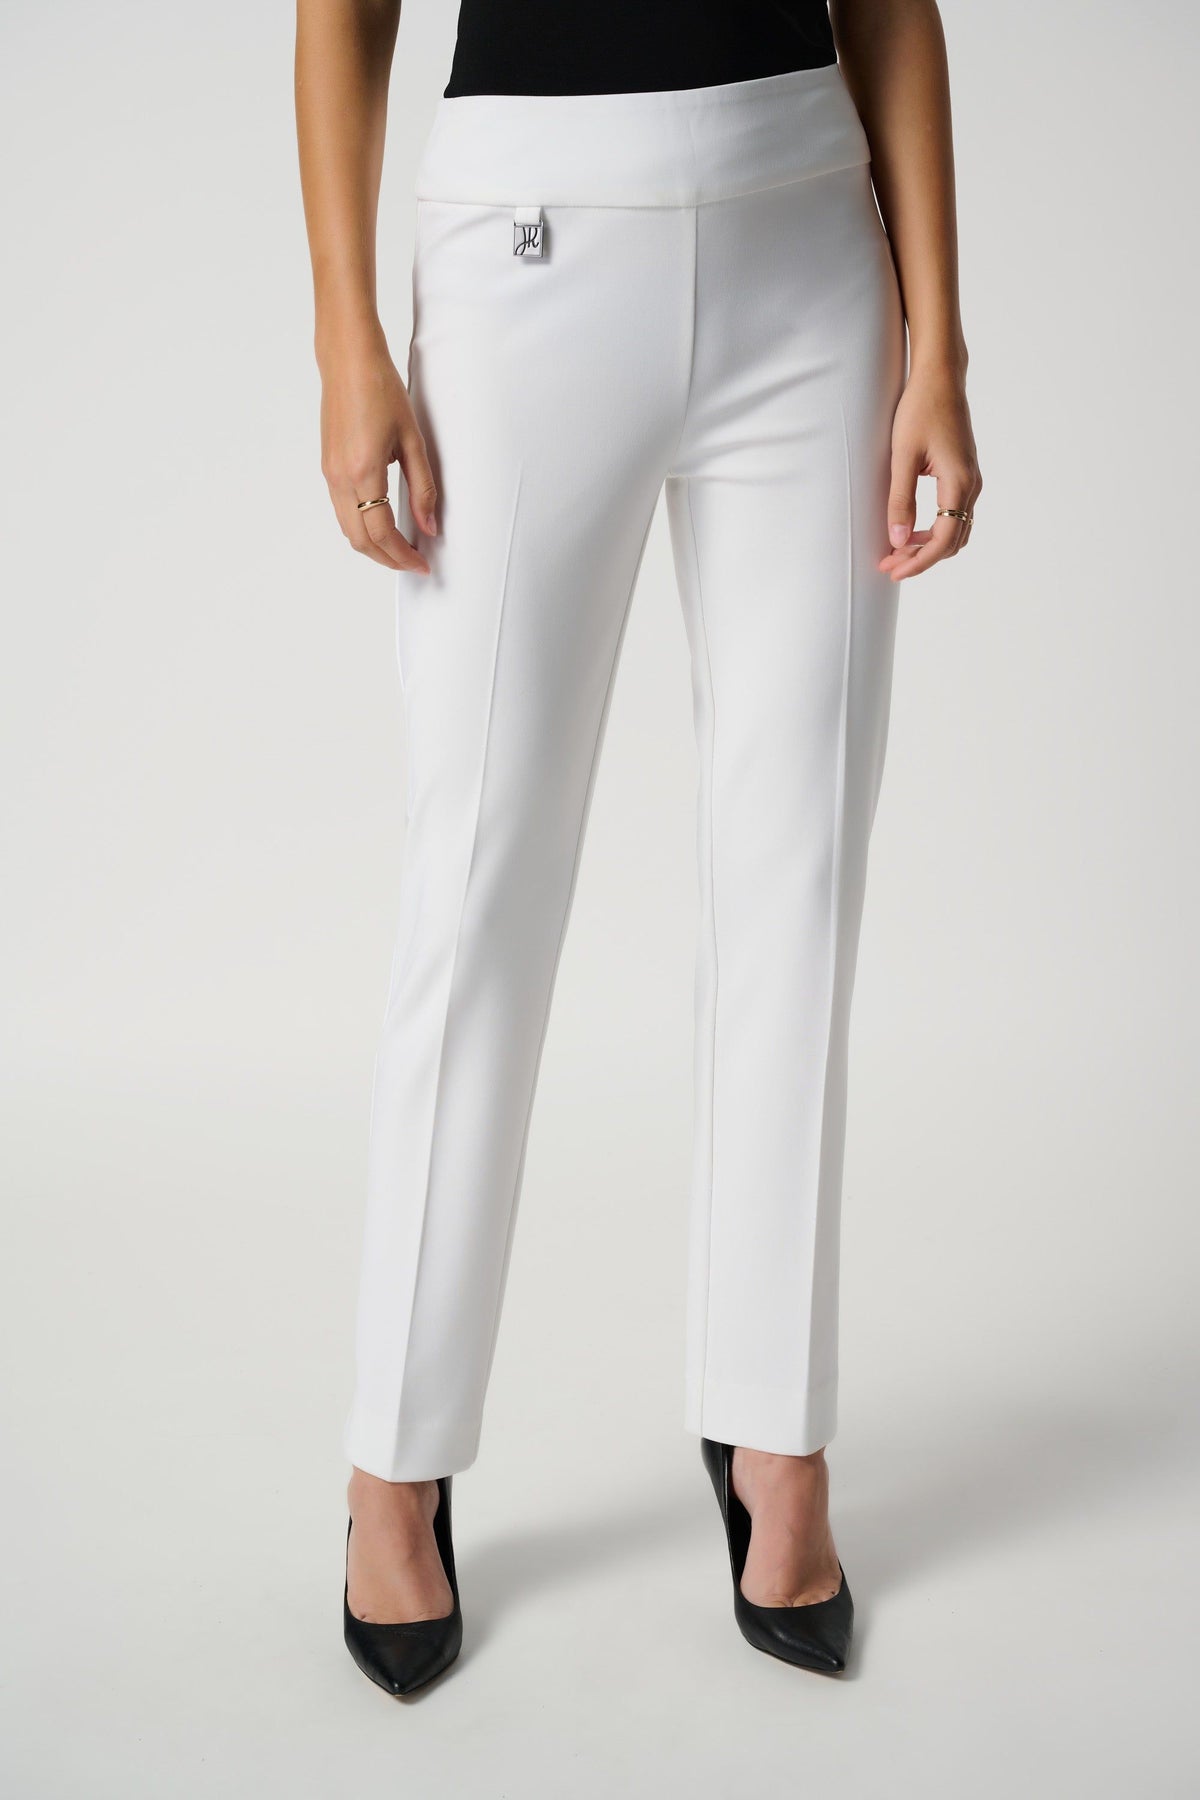 Joseph Ribkoff Slim Fit Pull-On Pant - Style 144092, vanilla, front